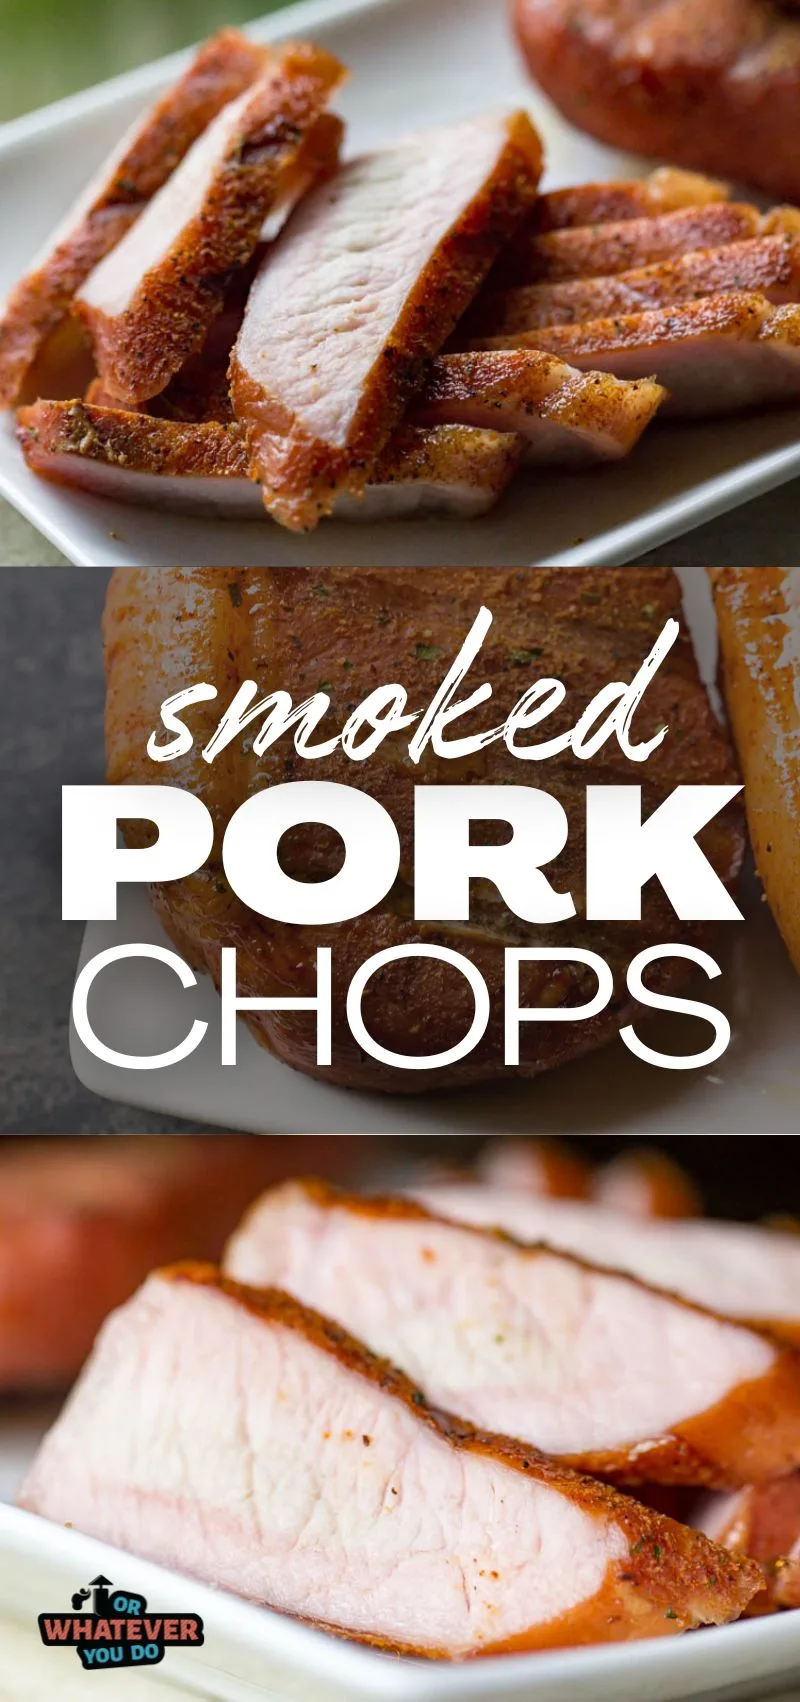 https://www.orwhateveryoudo.com/wp-content/uploads/2019/05/Smoked-Pork-Chops.jpg.webp